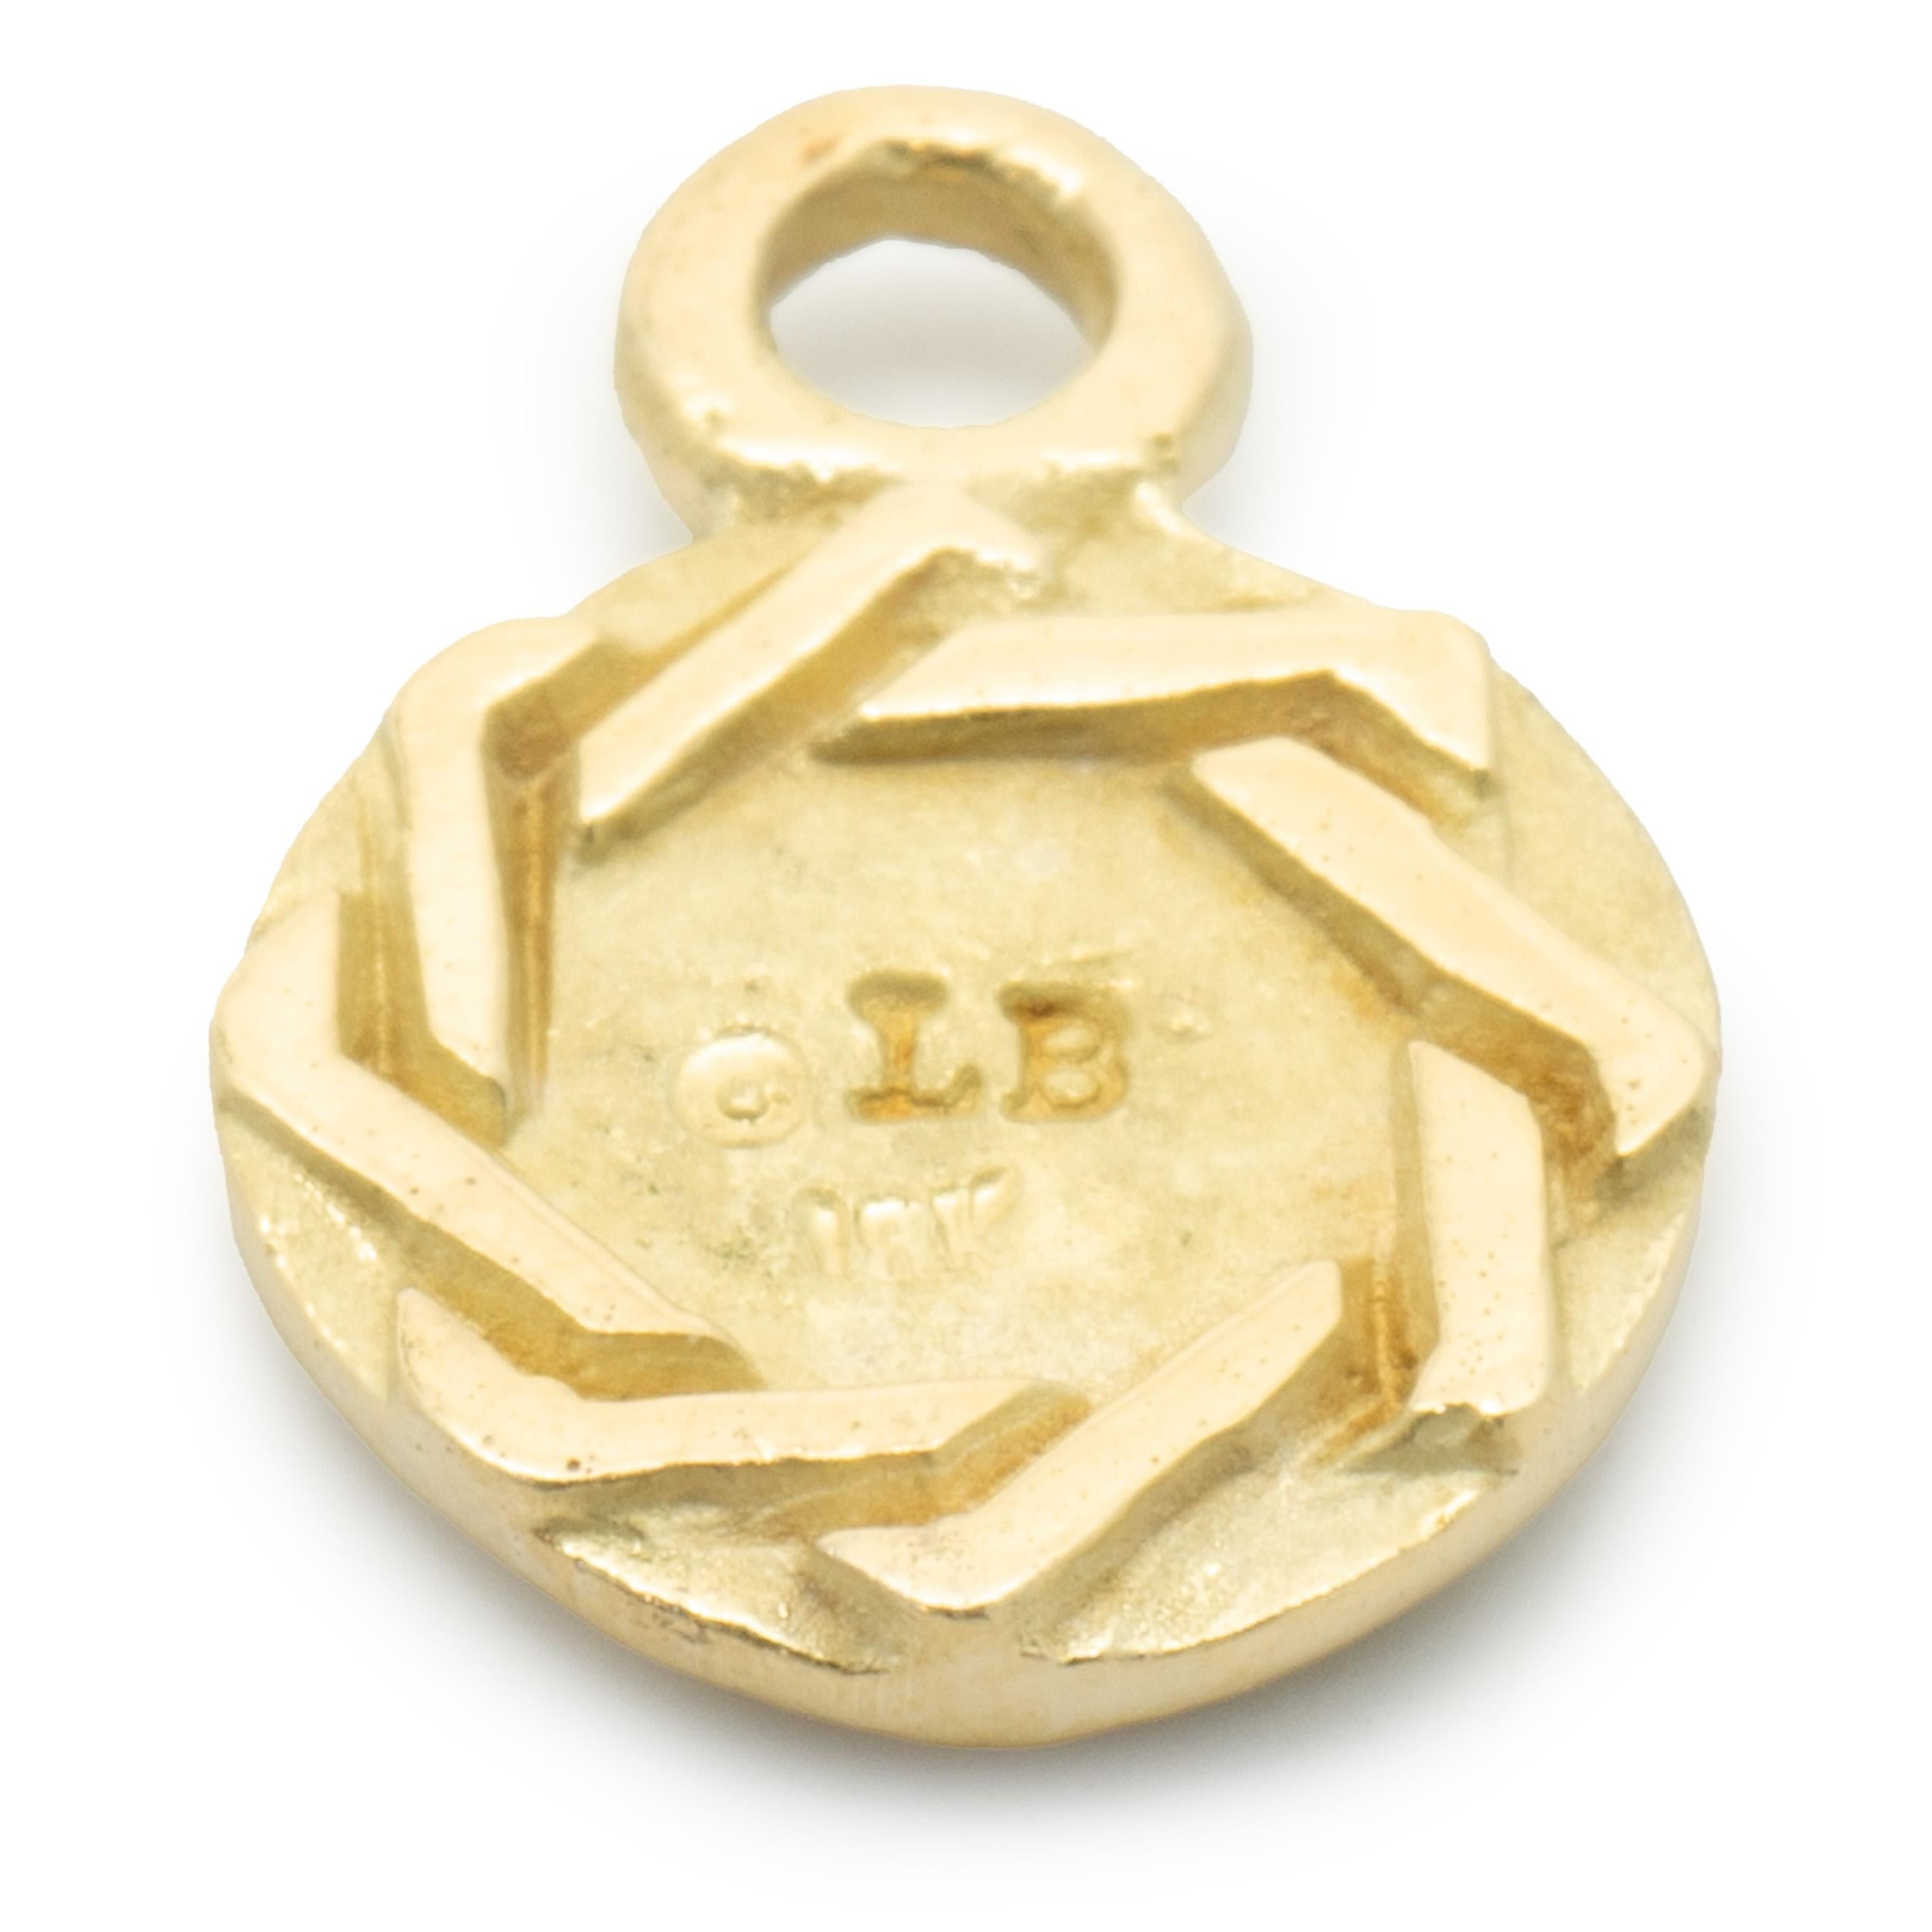 Designer: Lee Brevard
Material: 18K yellow gold  
Dimensions: charm measures 16mm long
Weight: 2.05 grams